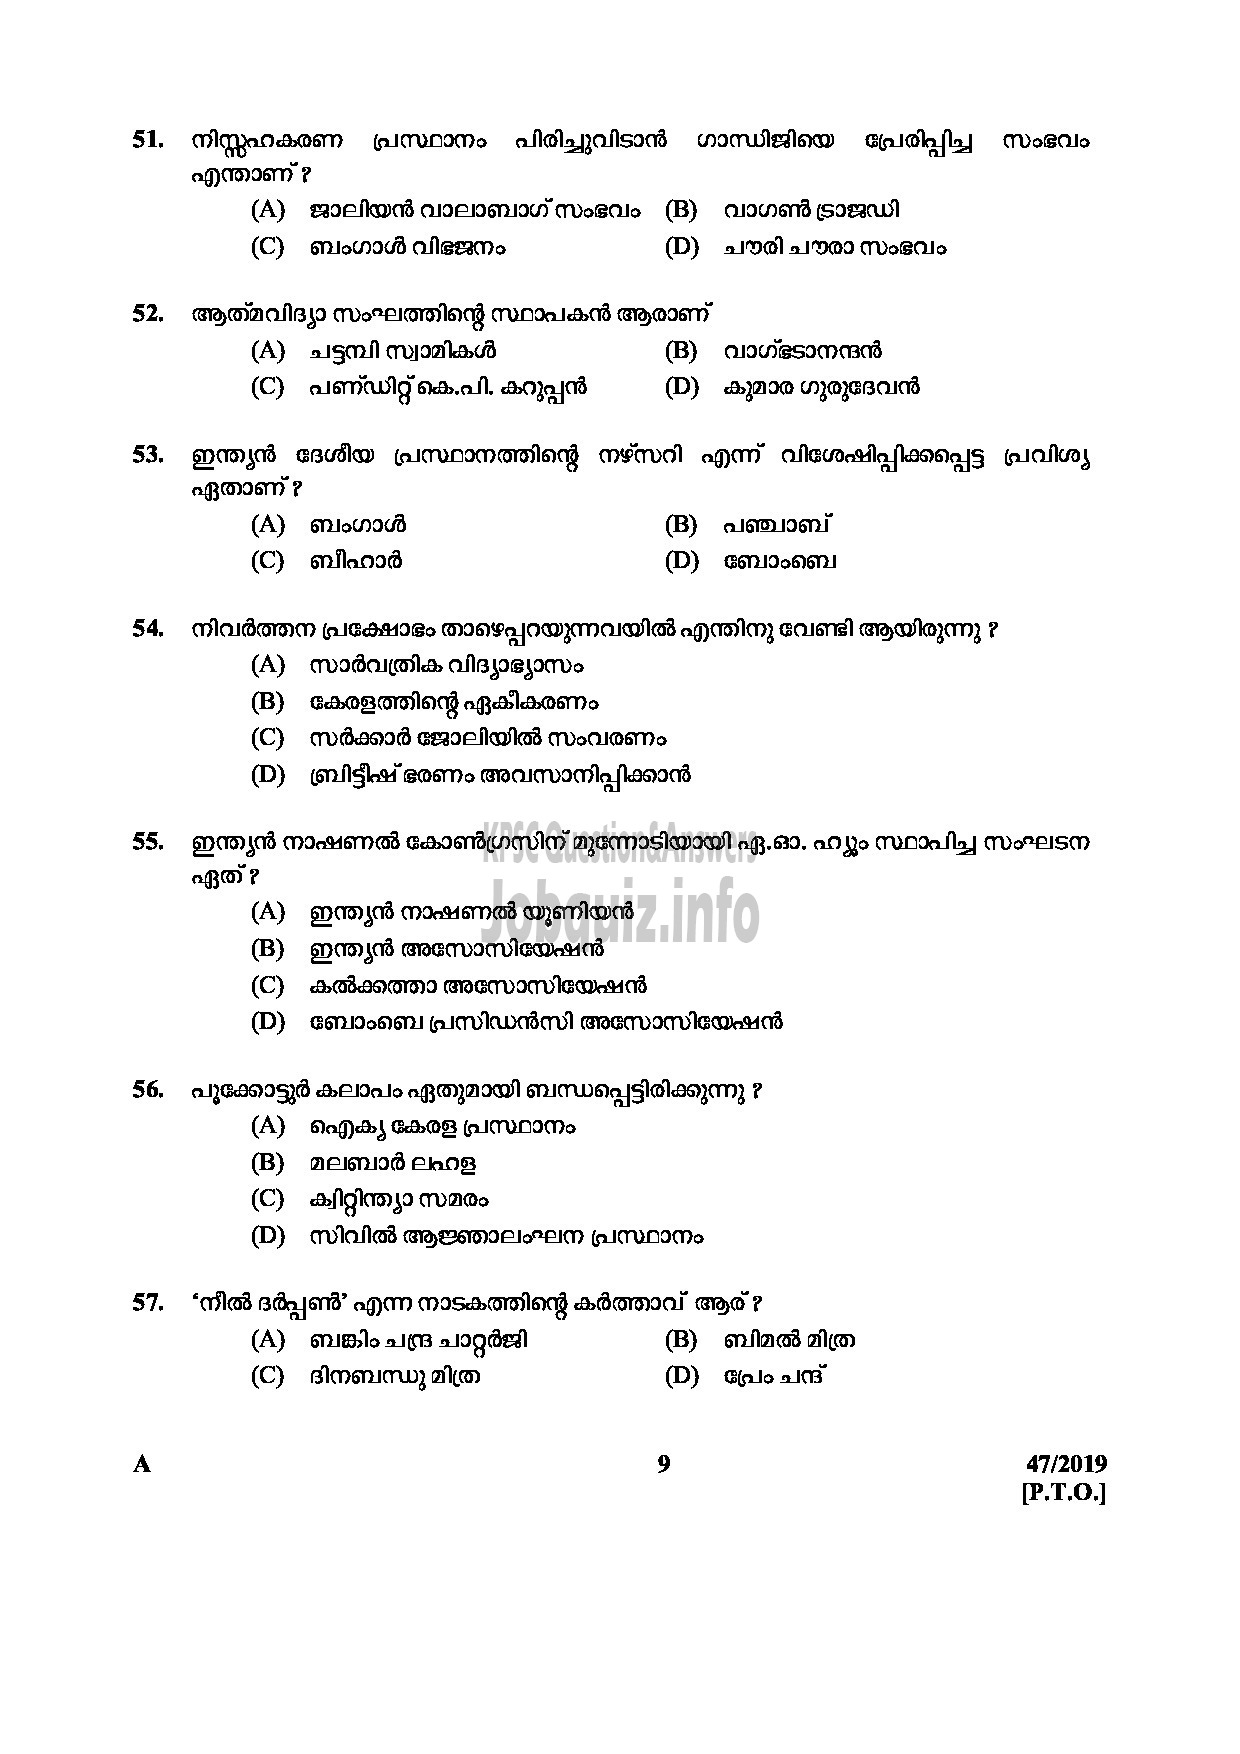 Kerala PSC Question Paper - LDC (TAMIL & MALAYALAM KNOWING) VARIOUS DEPARTMENTS English / Malayalam / Tamil-9